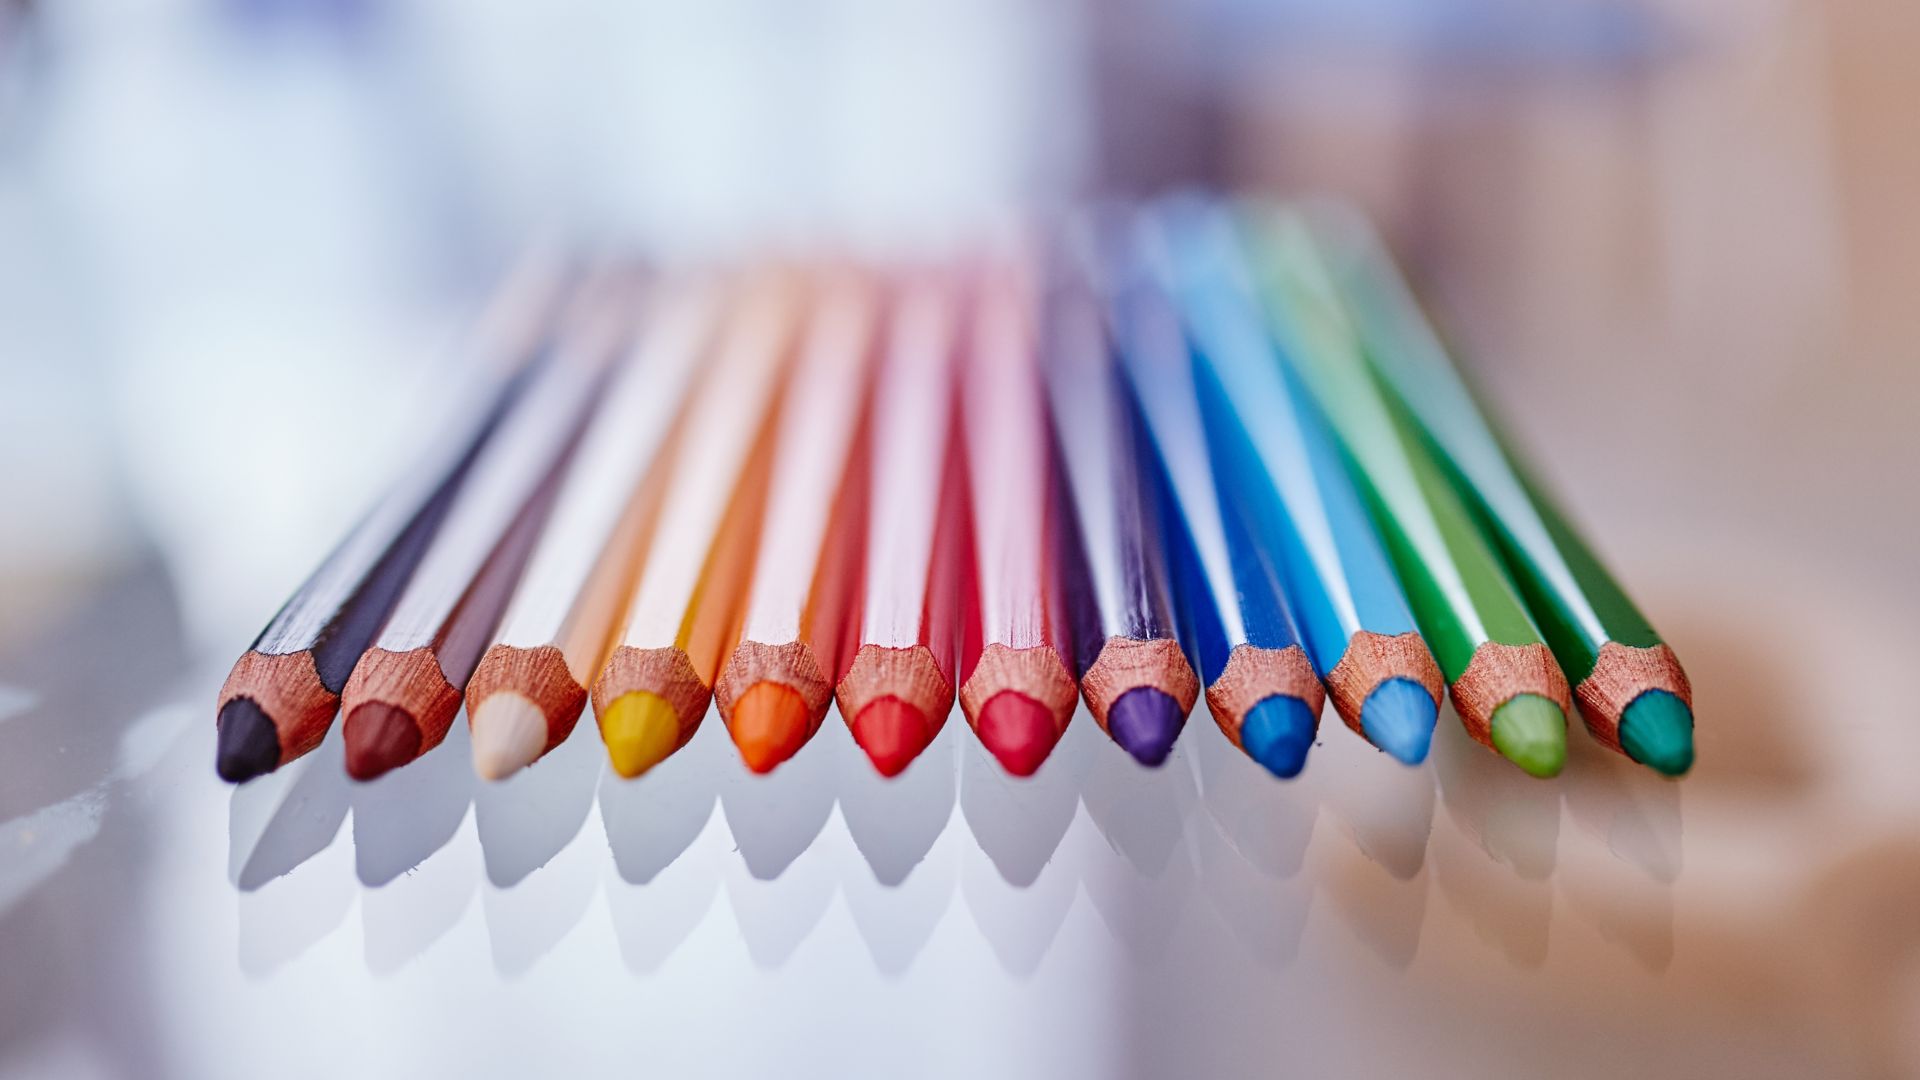 Wallpaper Colorful, sharpen pencils, reflections